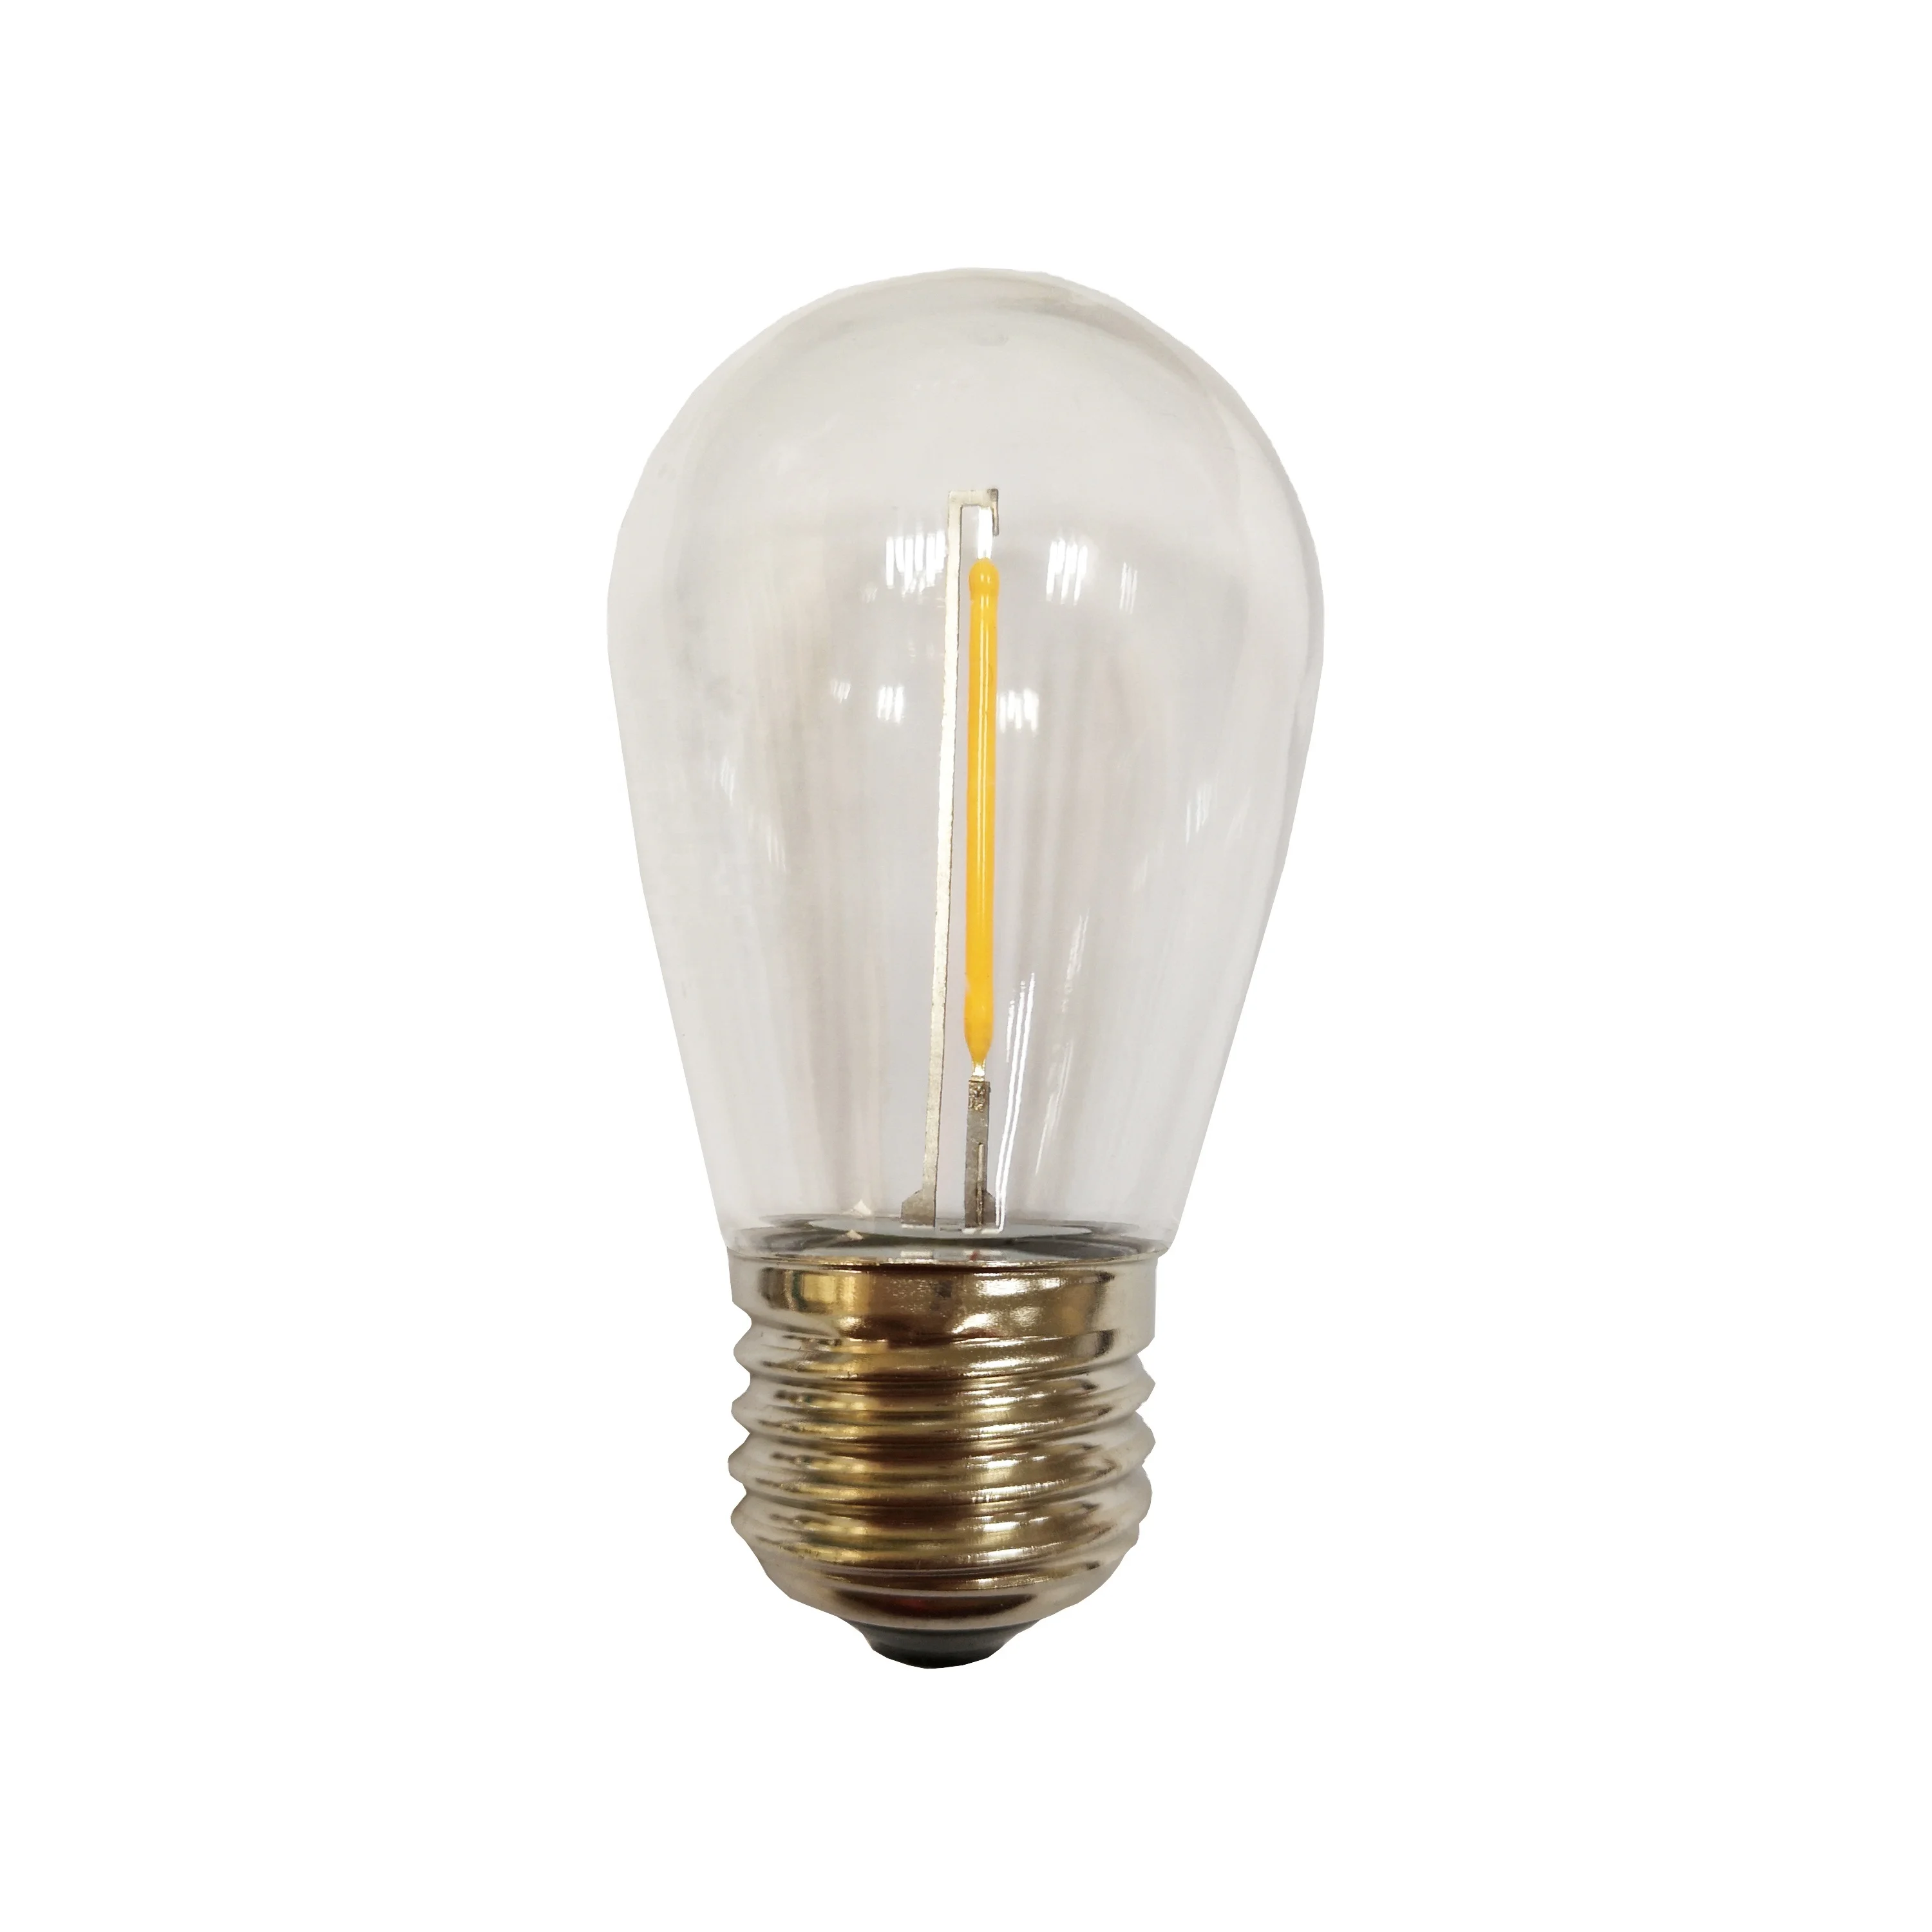 Warm white 1W led filament s14 shatterproof light bulb